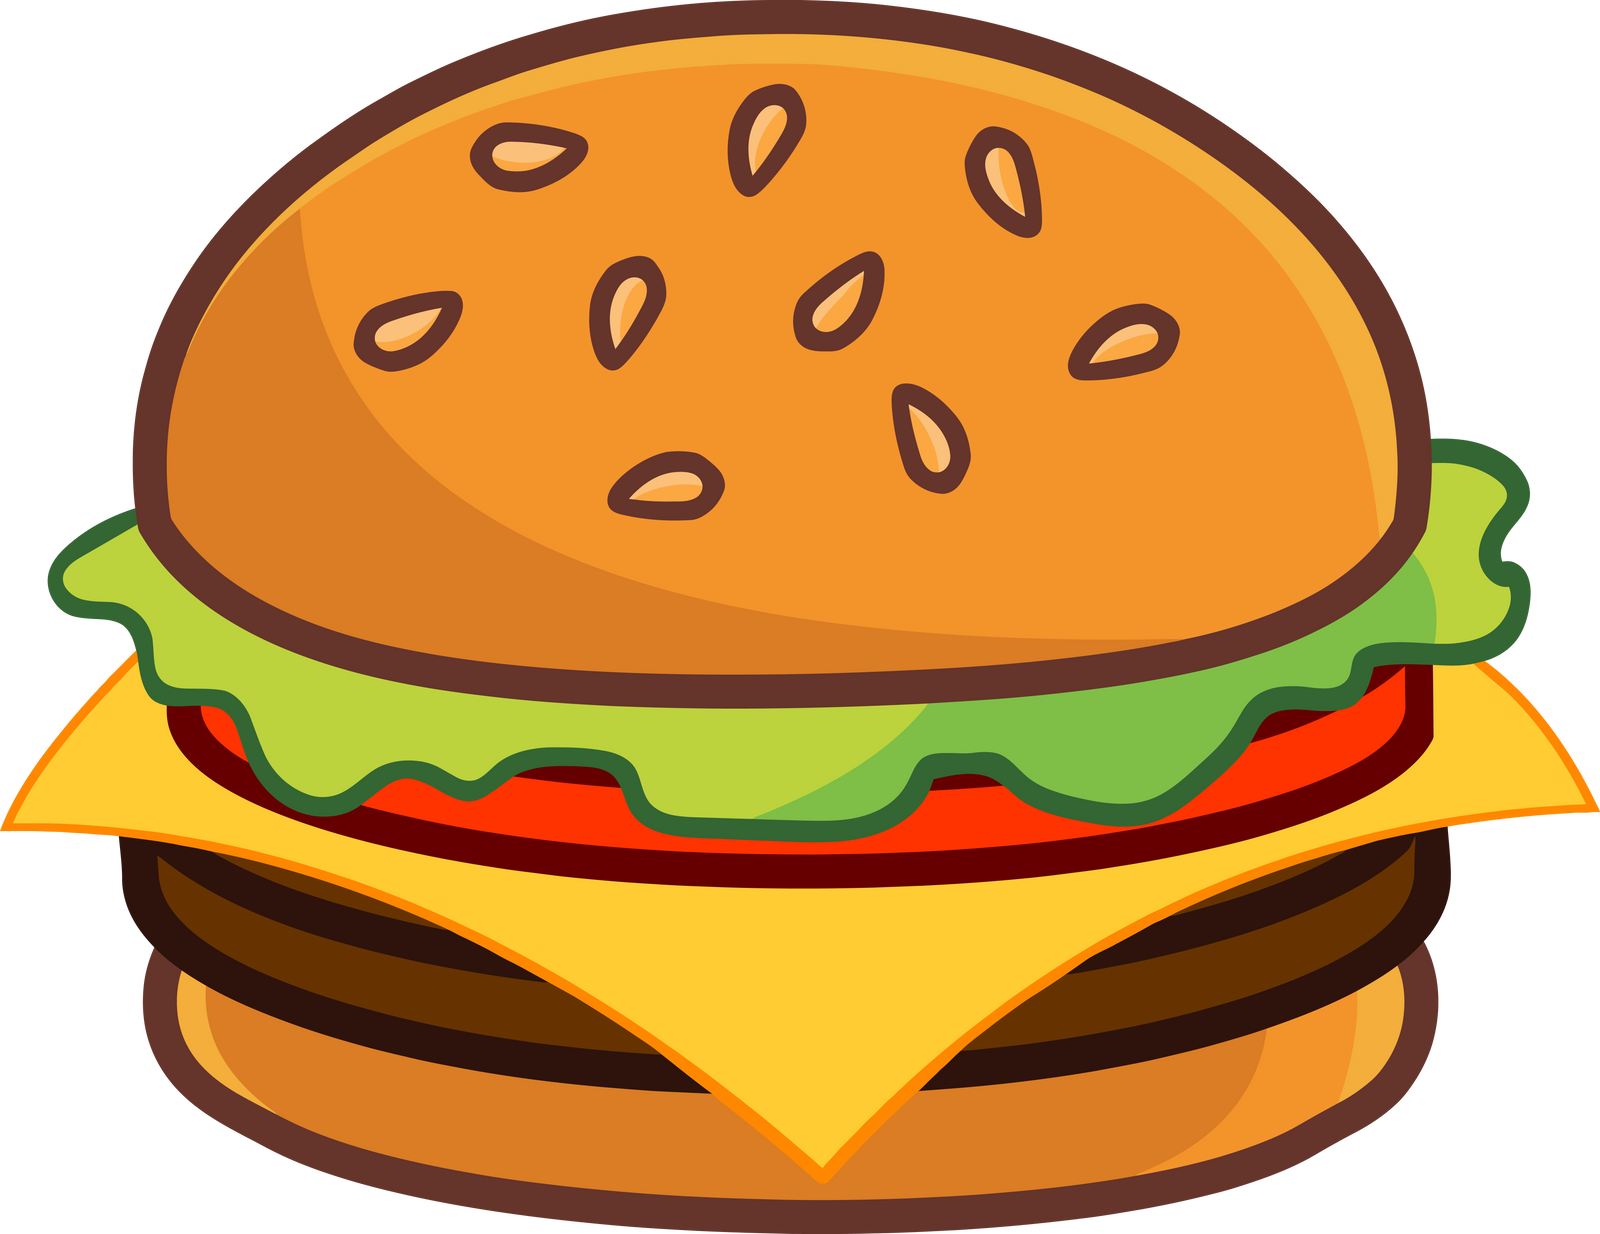 Illustration of a Burger